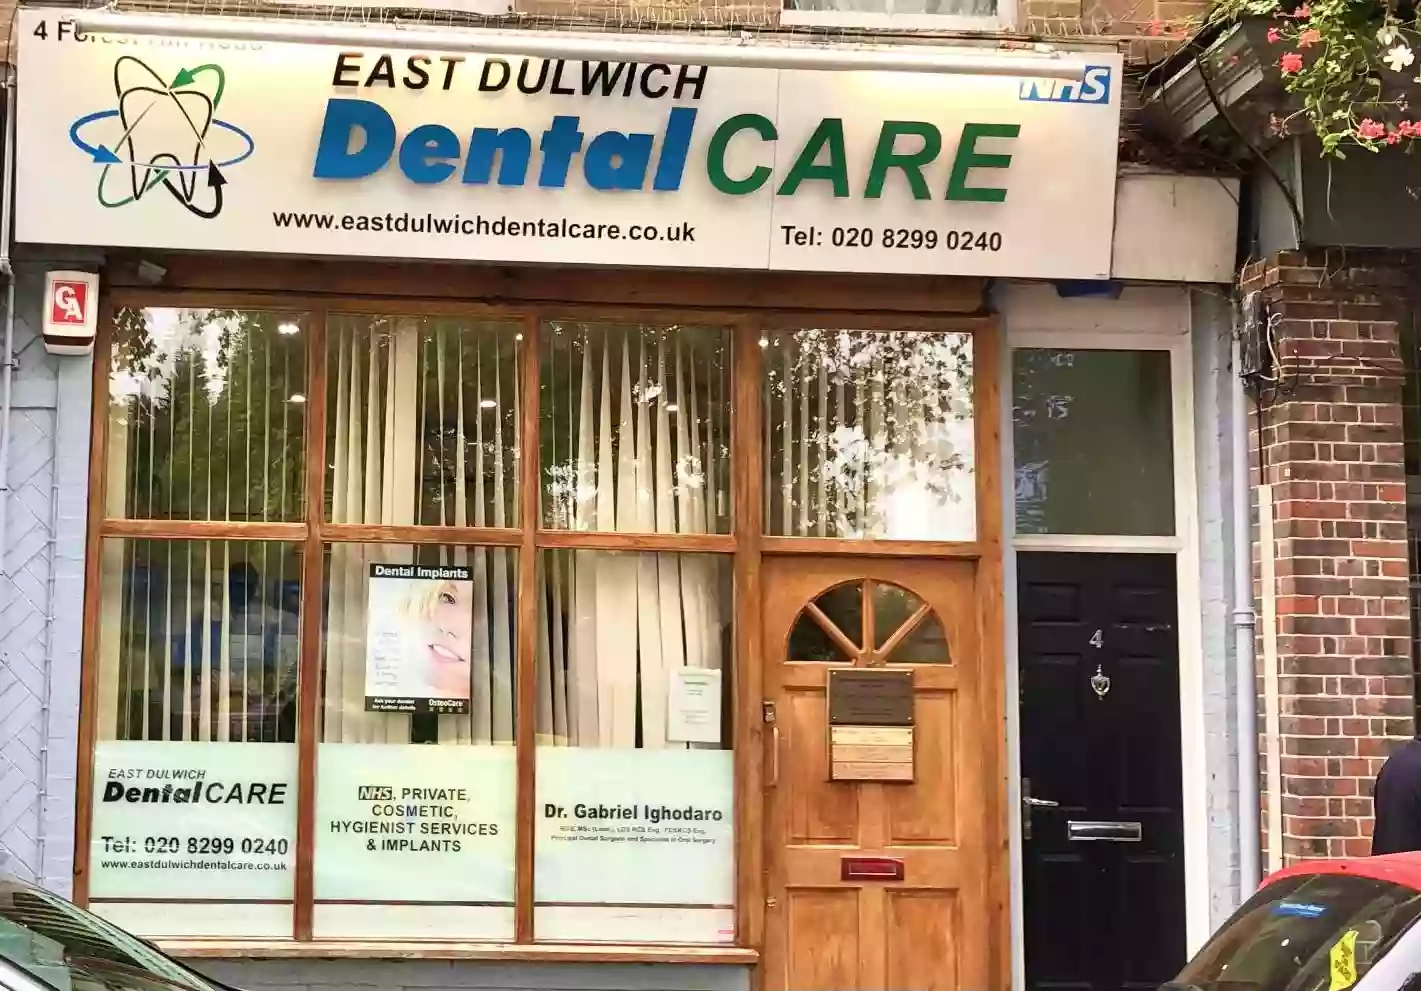 East Dulwich Dental Care